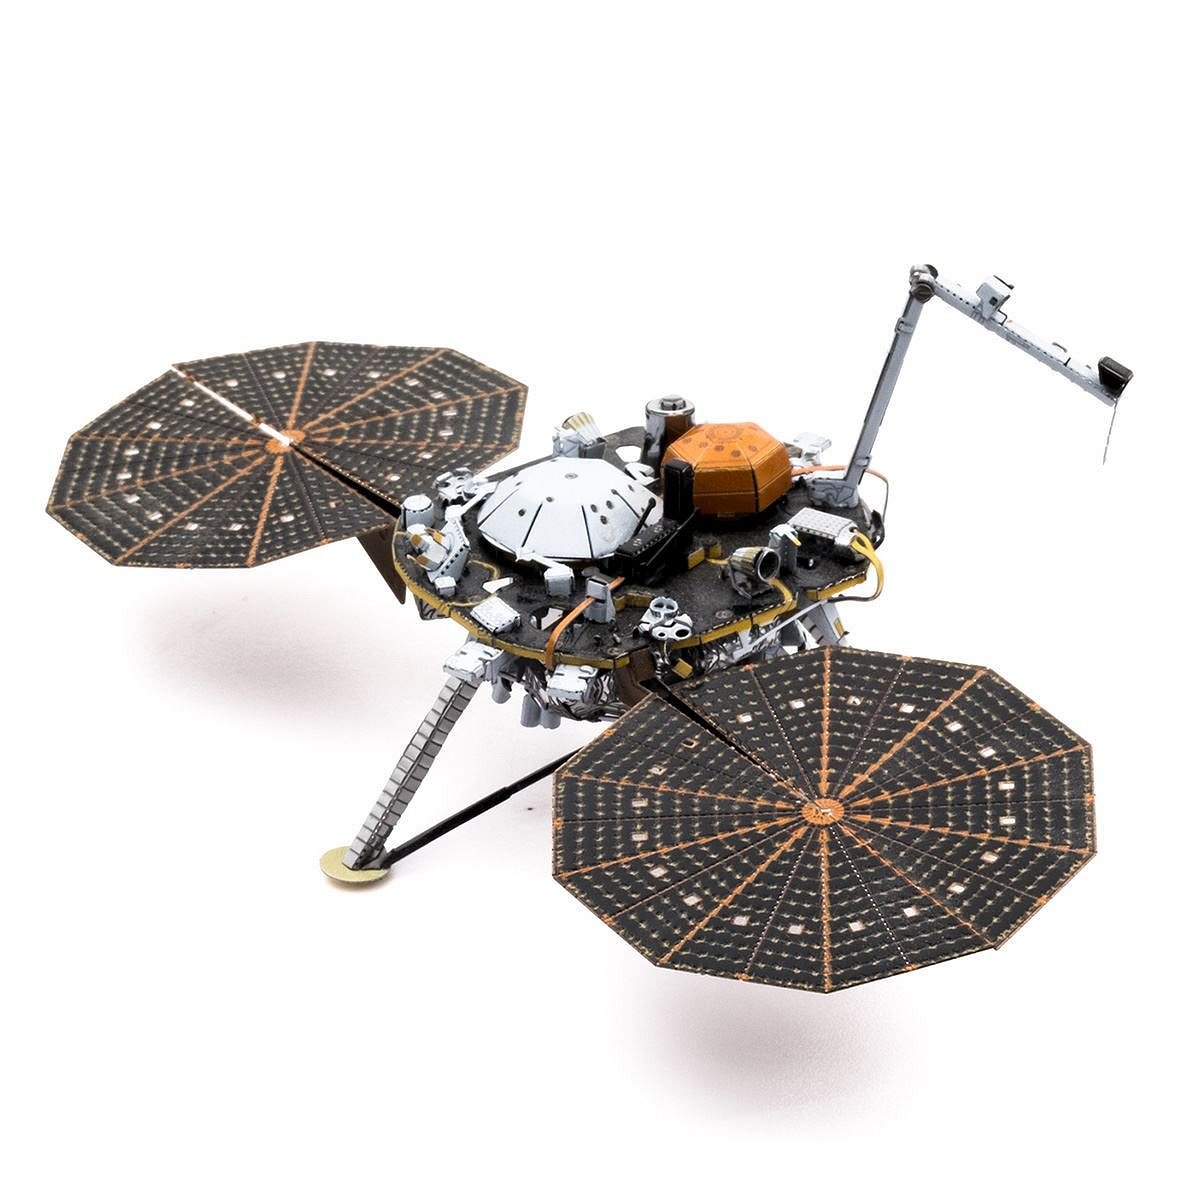 Stavebnice kovového modelu Metal Earth MMS193 Insight Mars lander (032309011937)